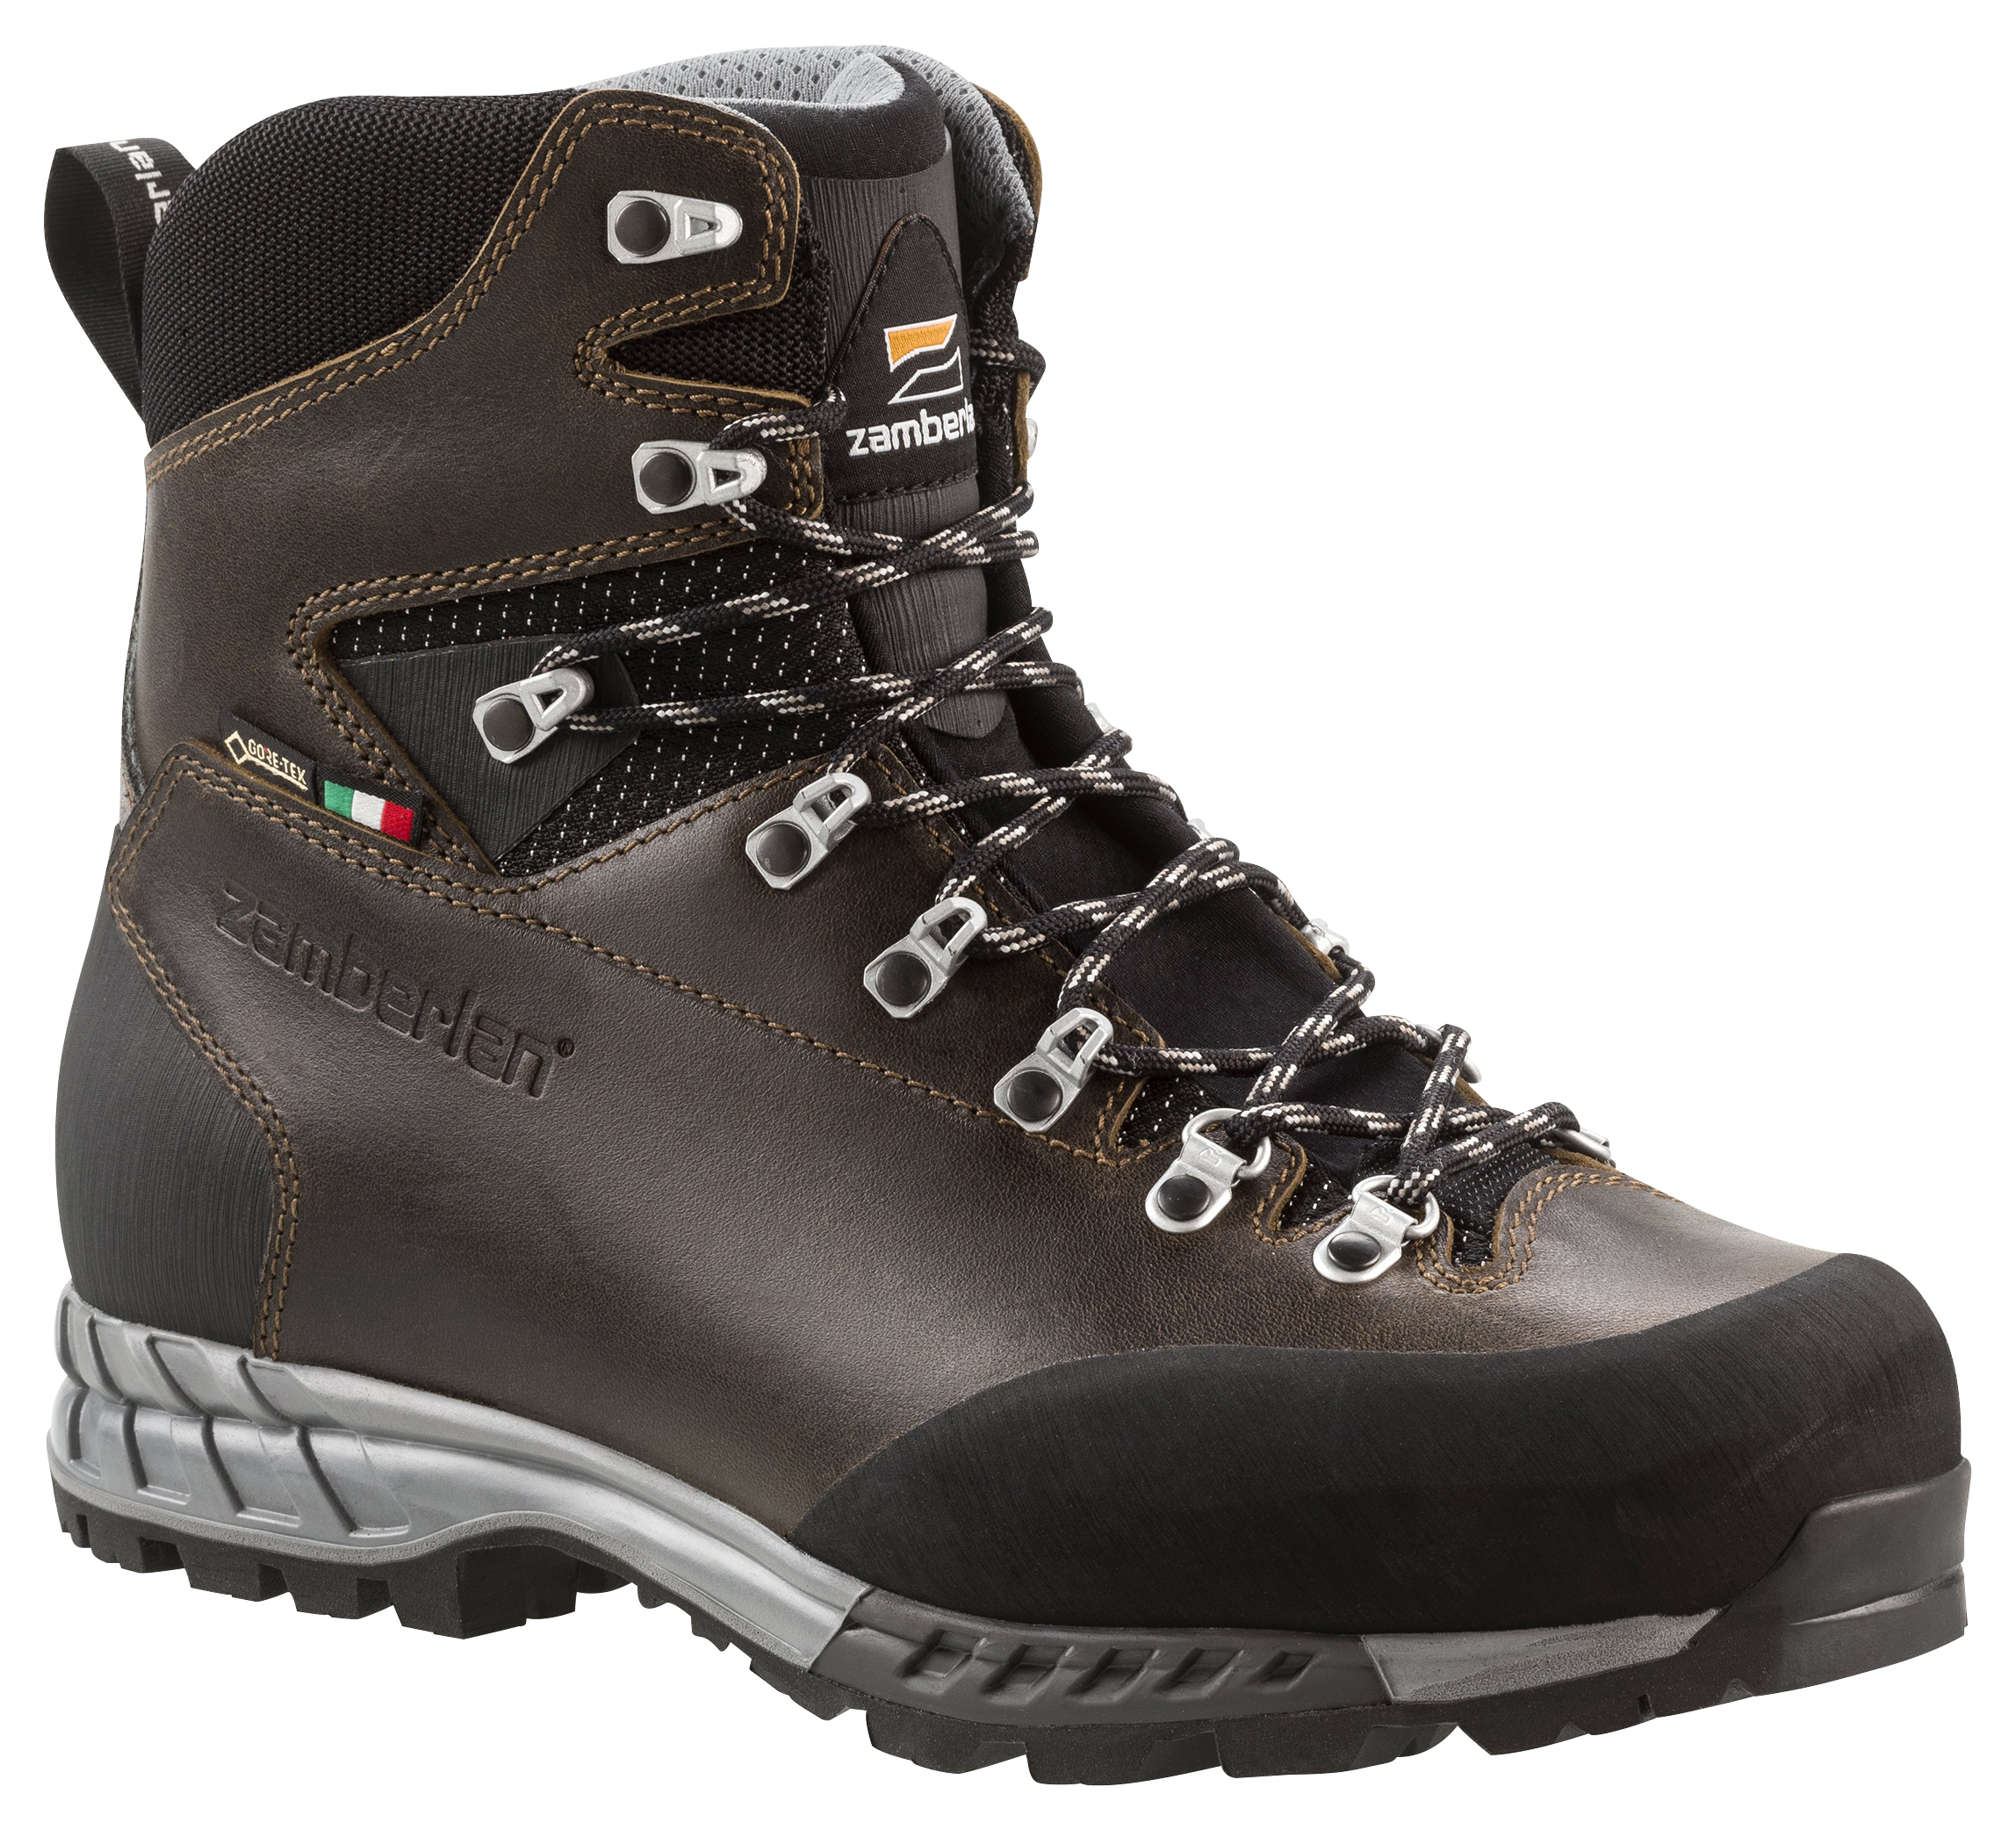 Zamberlan 1111 Cresta GTX   RR Waterproof Hiking Boots for Men - Waxed Dark Brown - 11 5M